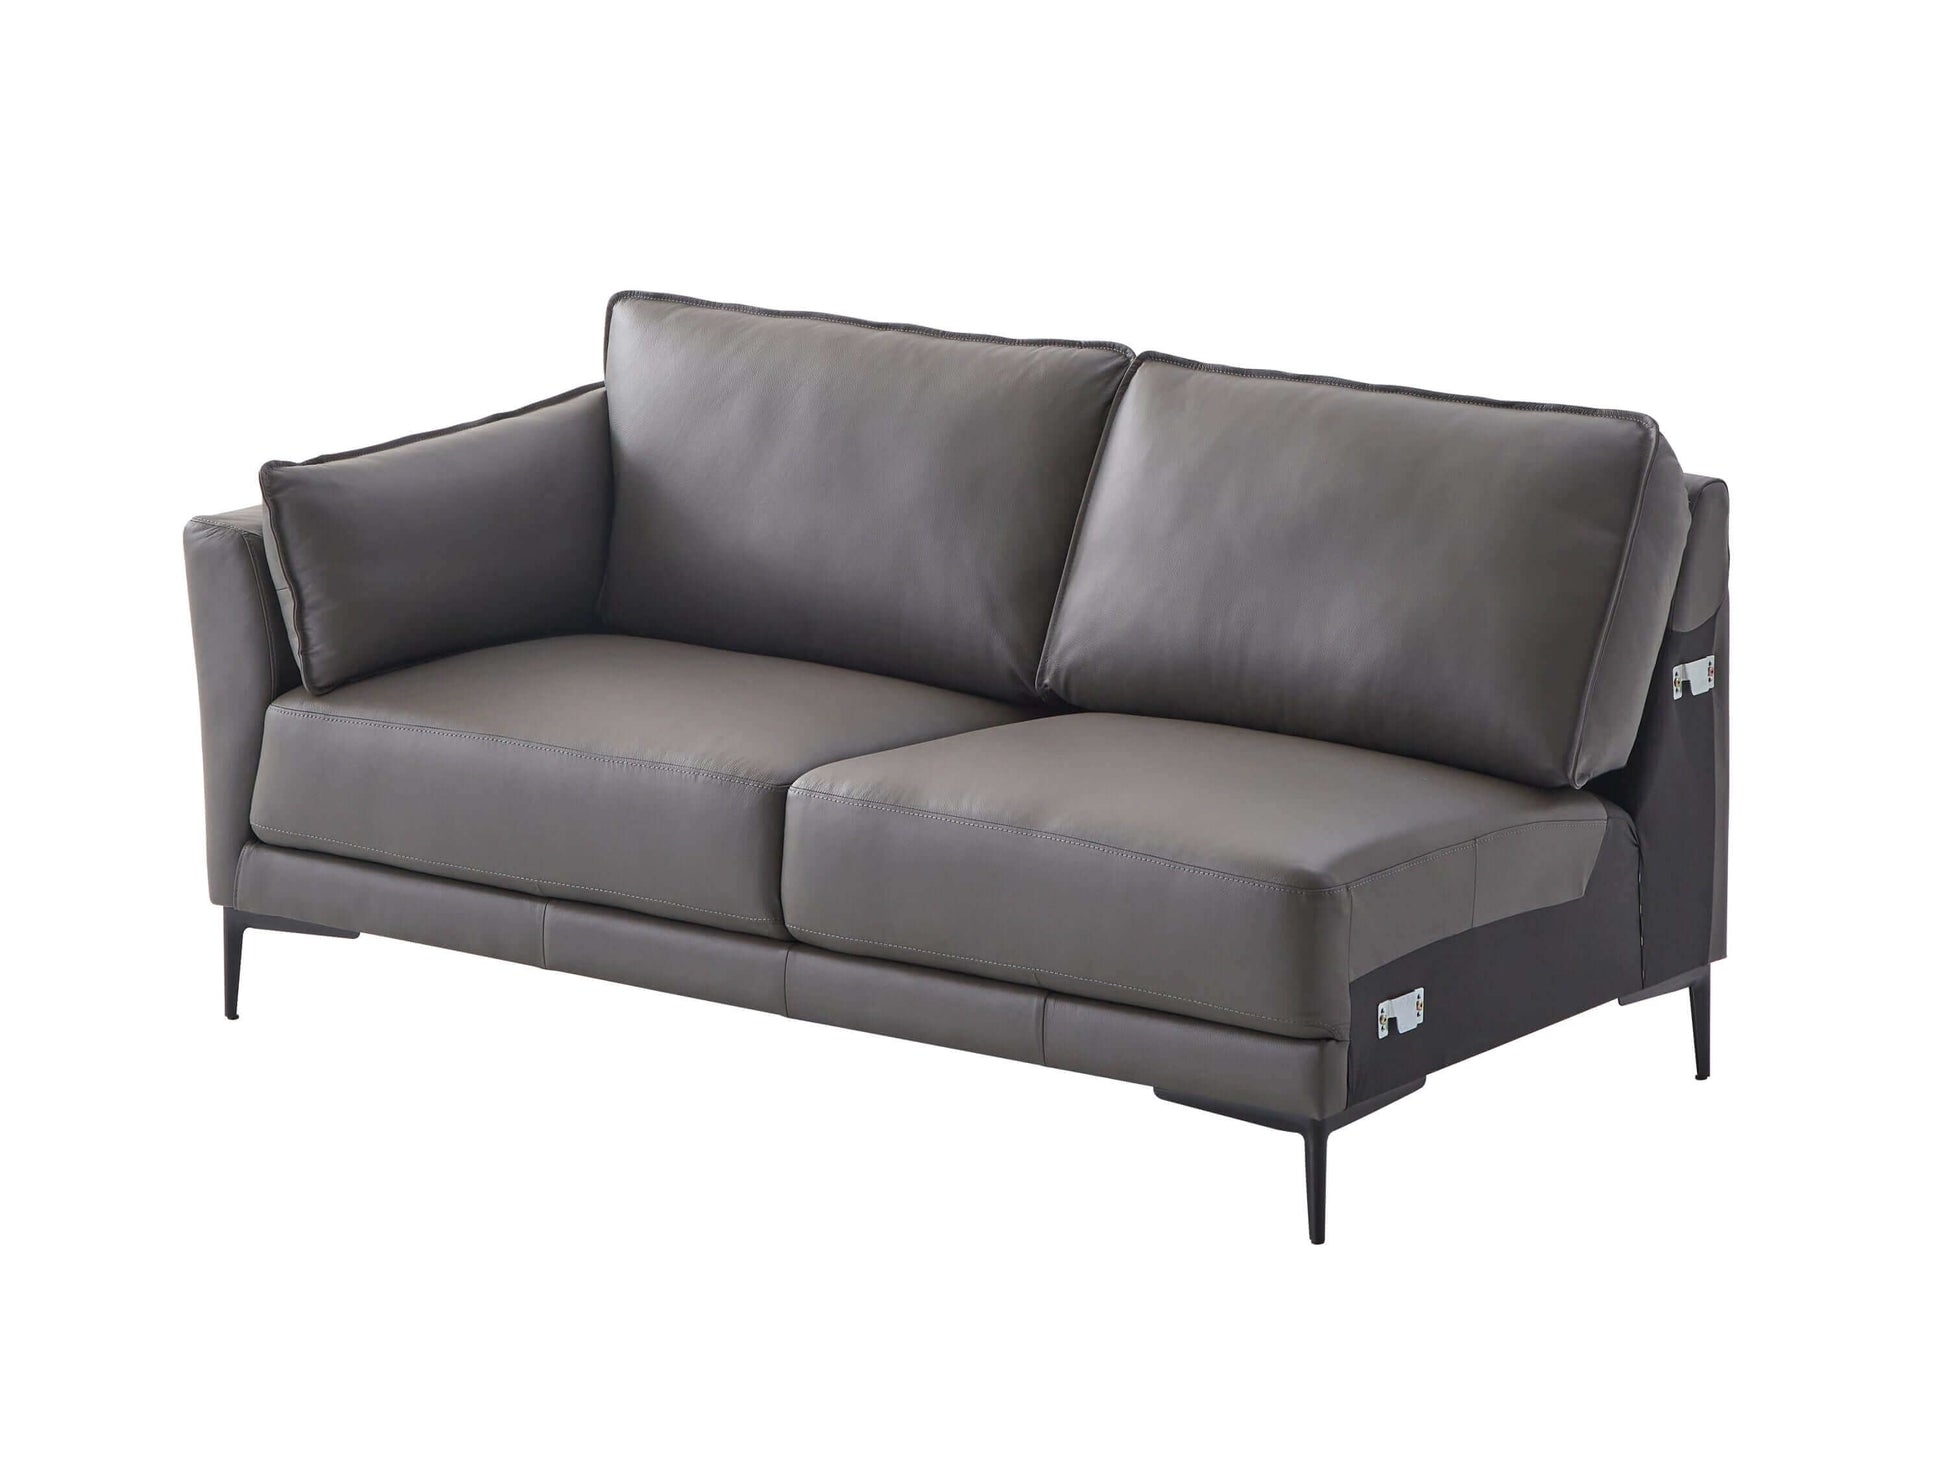 Meka Top Grain Gray Leather Sectional RF Chaise Sofa - Revel Sofa 